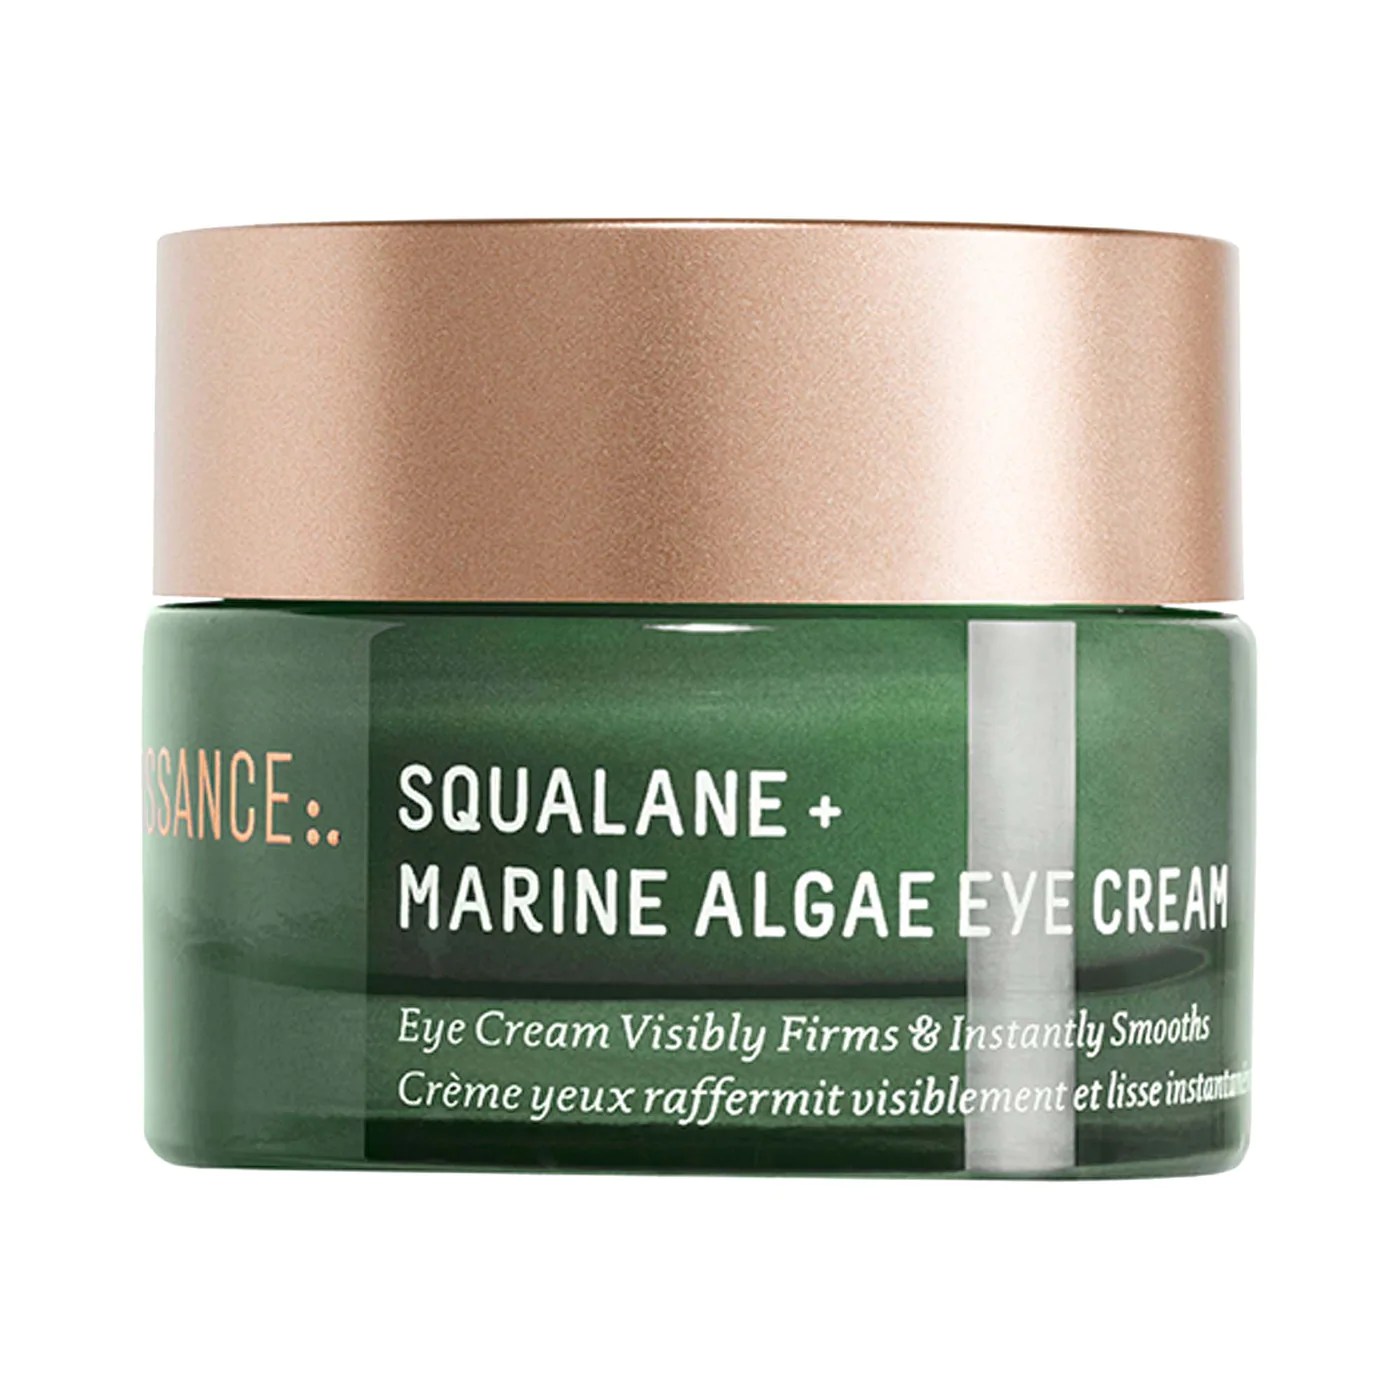 biossance squalane and marine algae eye cream